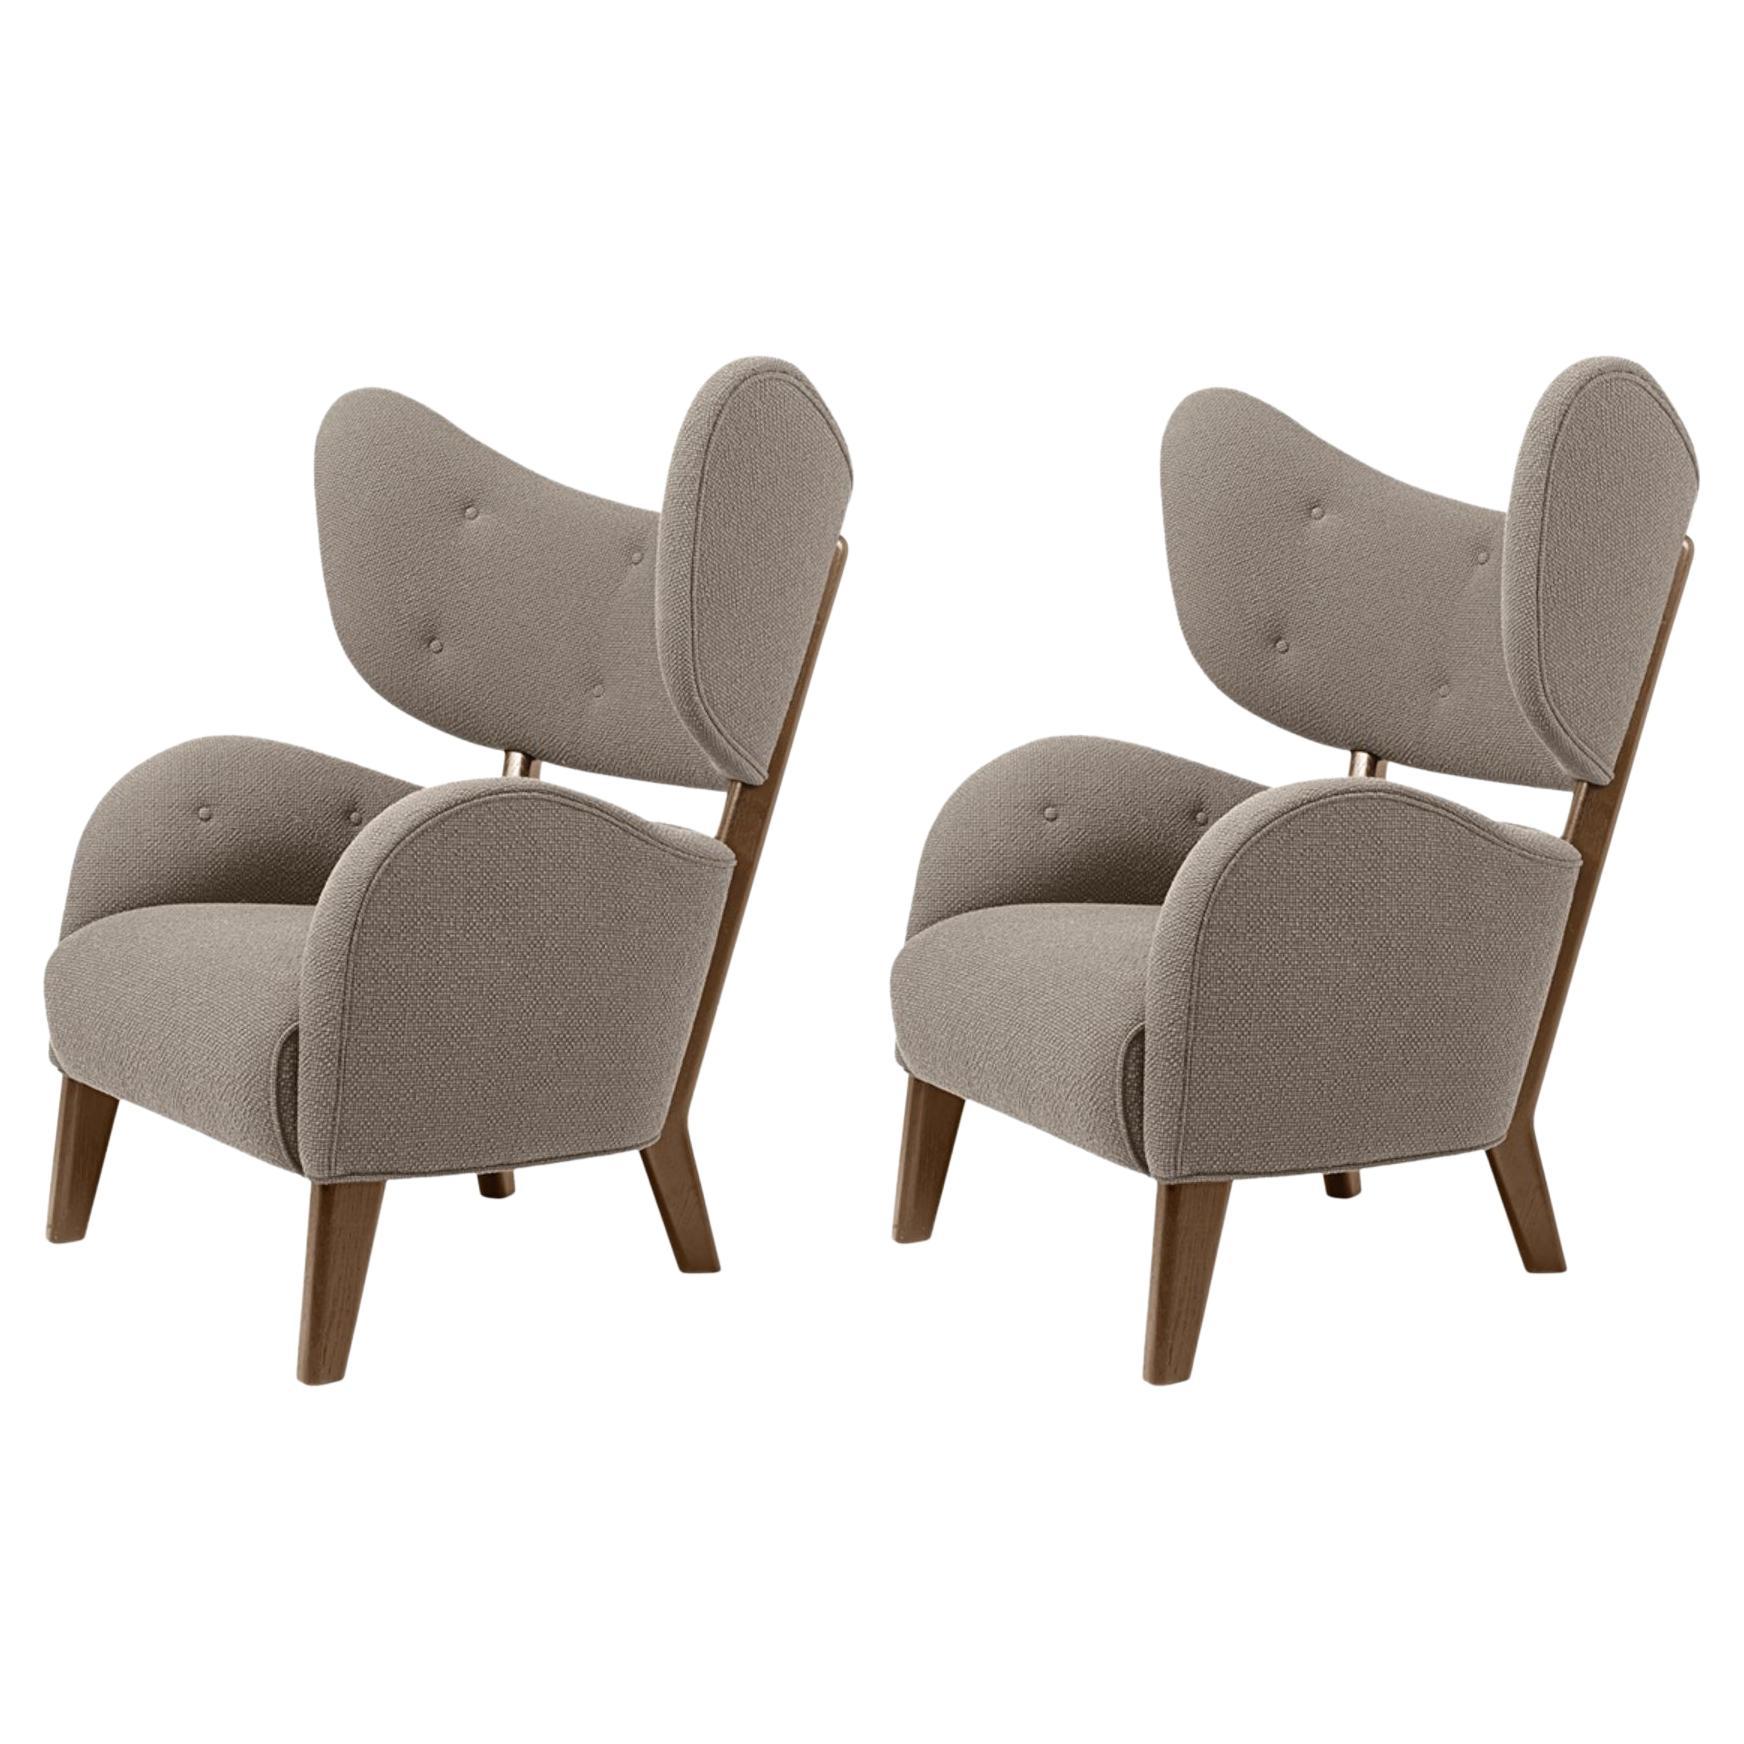 Set of 2 Beige Raf Simons Vidar 3 Smoked Oak My Own Chair Lounge Chair by Lassen